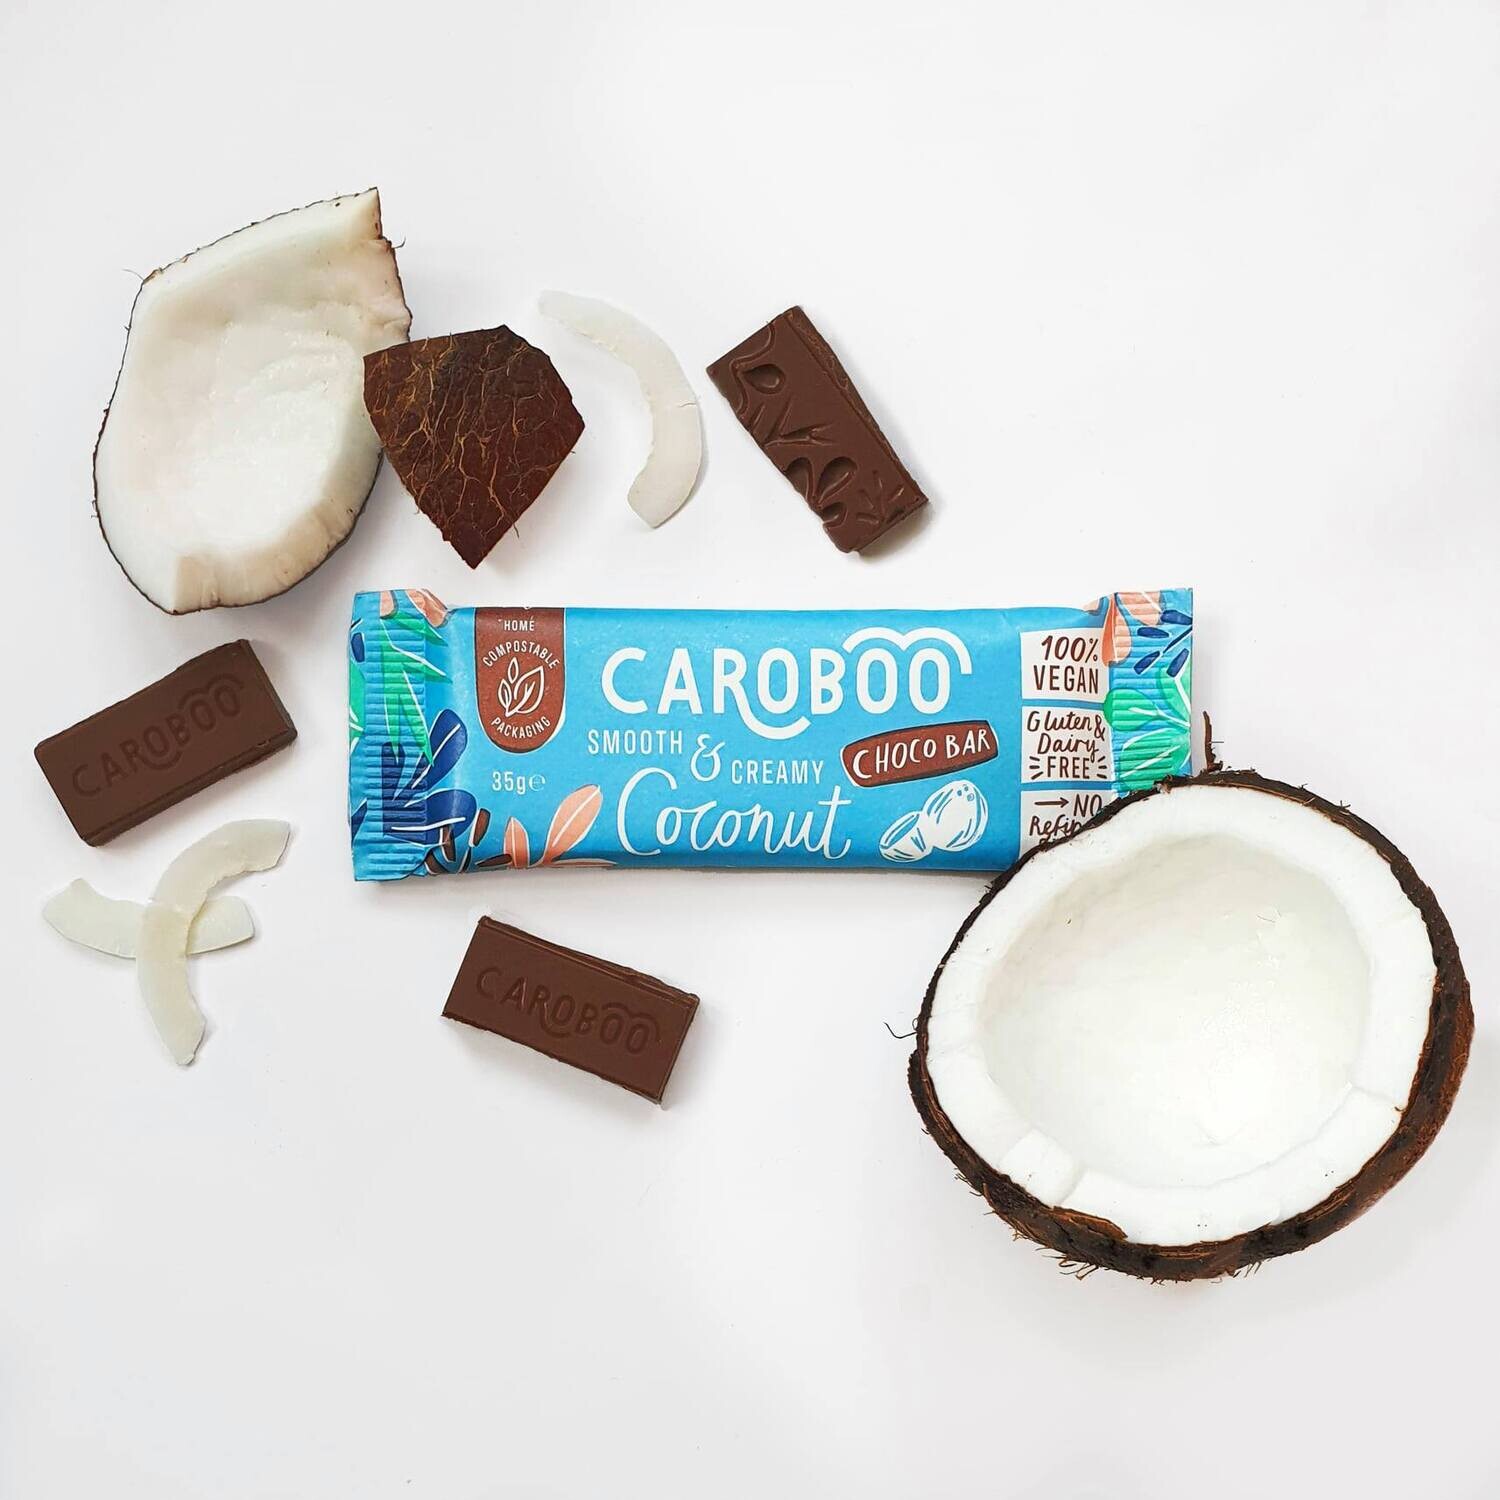 Caroboo Coconut Bar